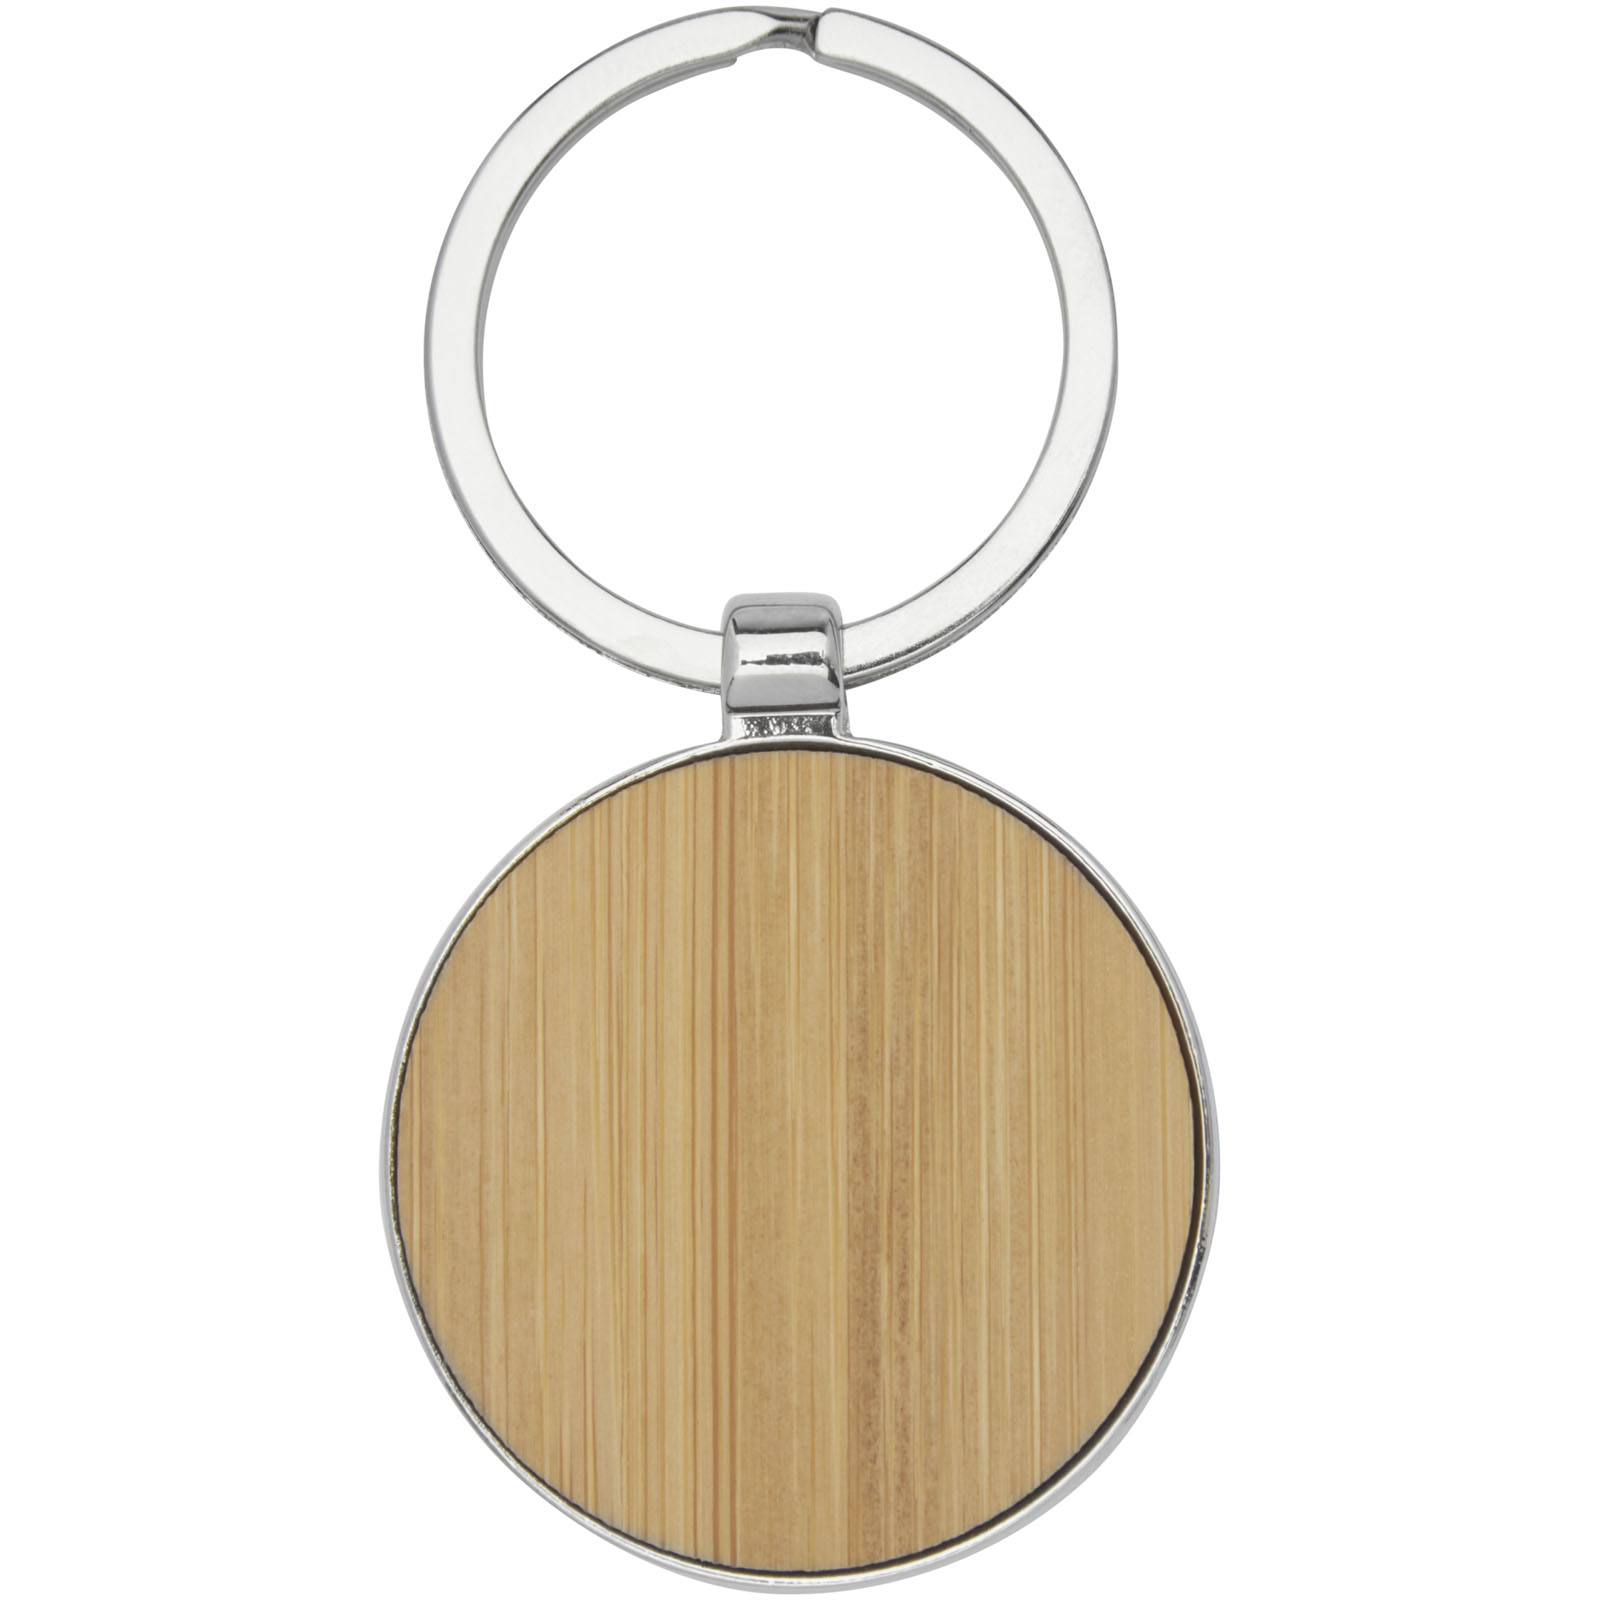 Advertising Keychains & Keyrings - Nino bamboo round keychain - 2